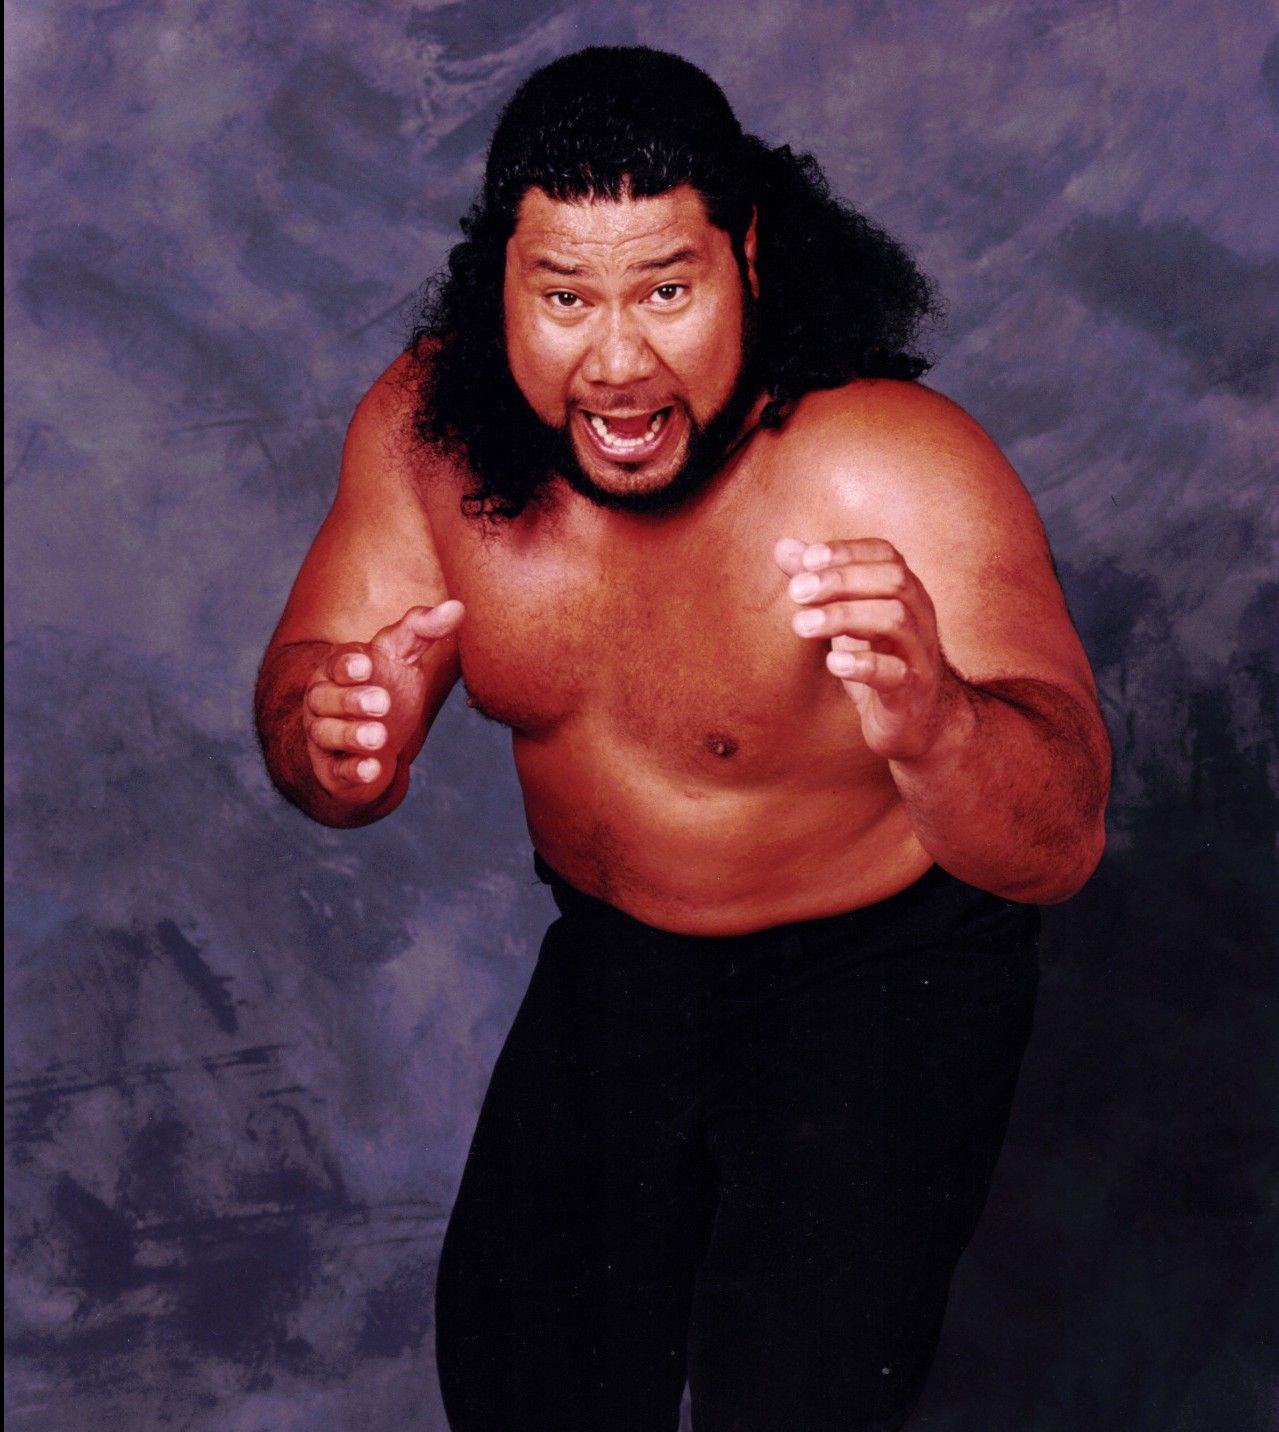 Top 15 Insane Stories That Prove Meng/Haku Was The Toughest Wrestler Ever